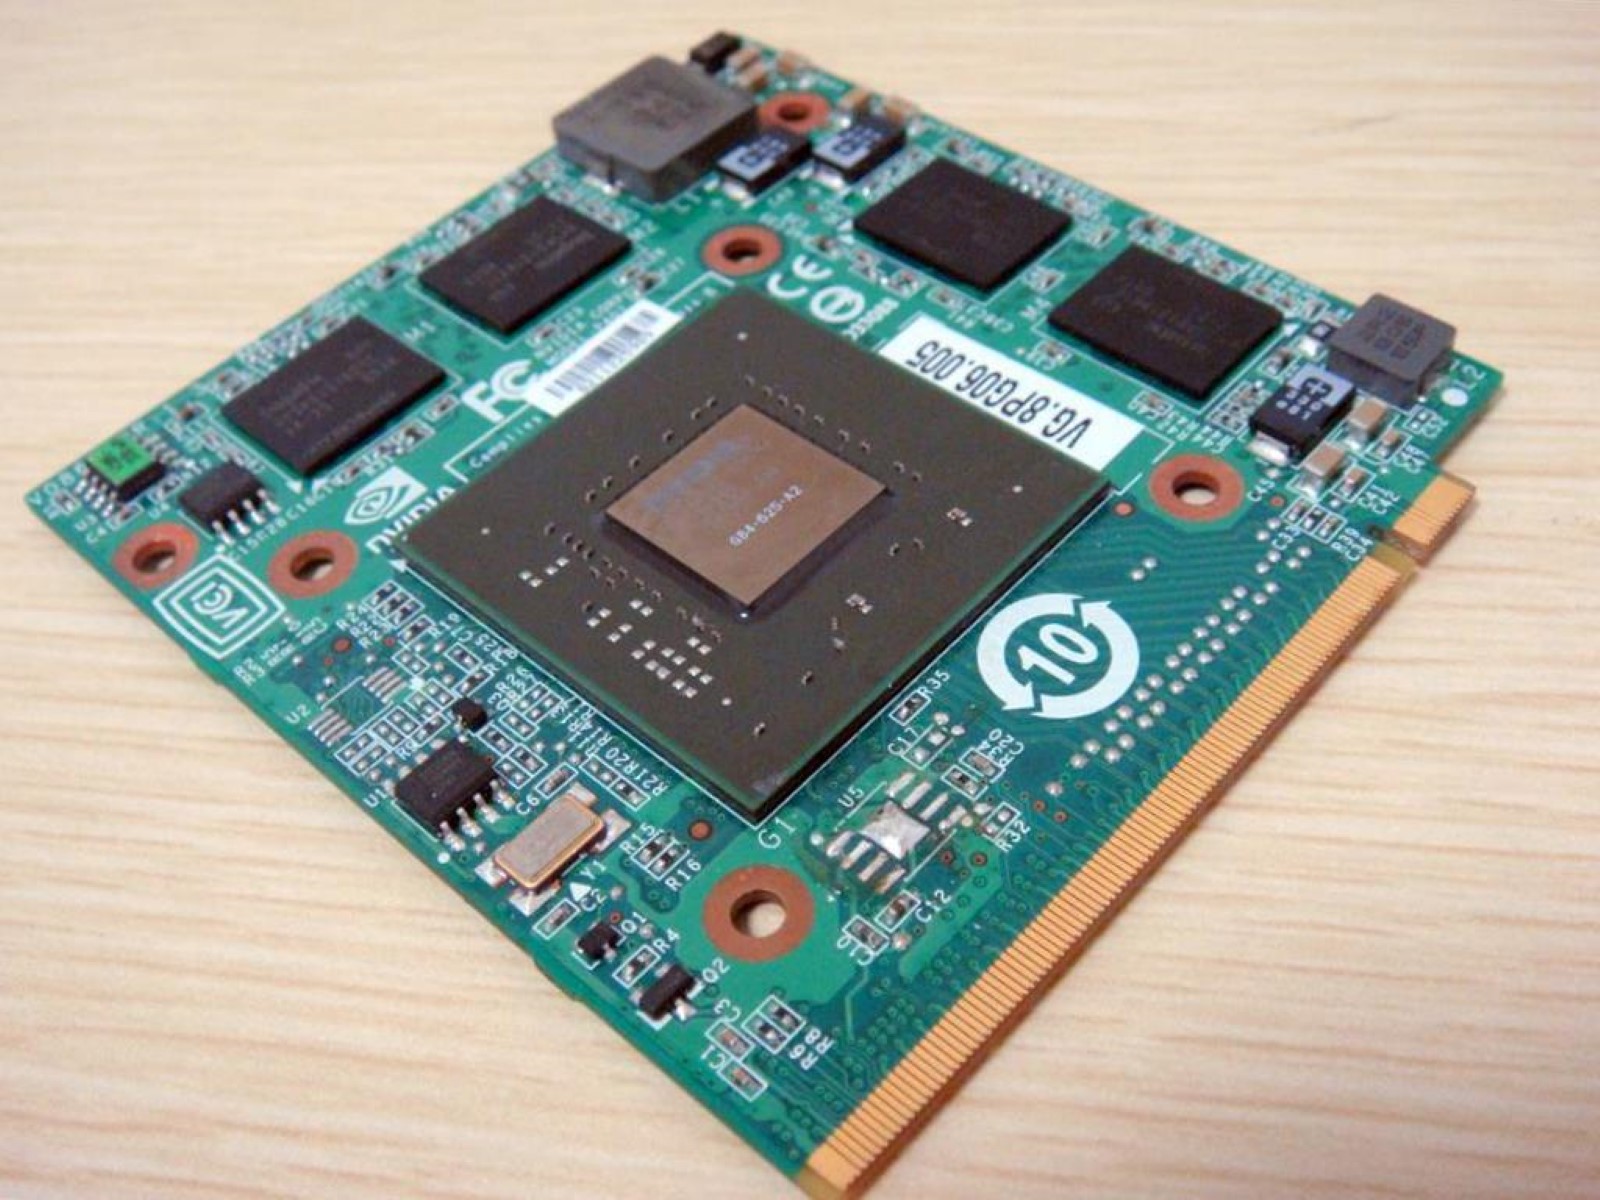 nVidia 9500M GS MXM Card